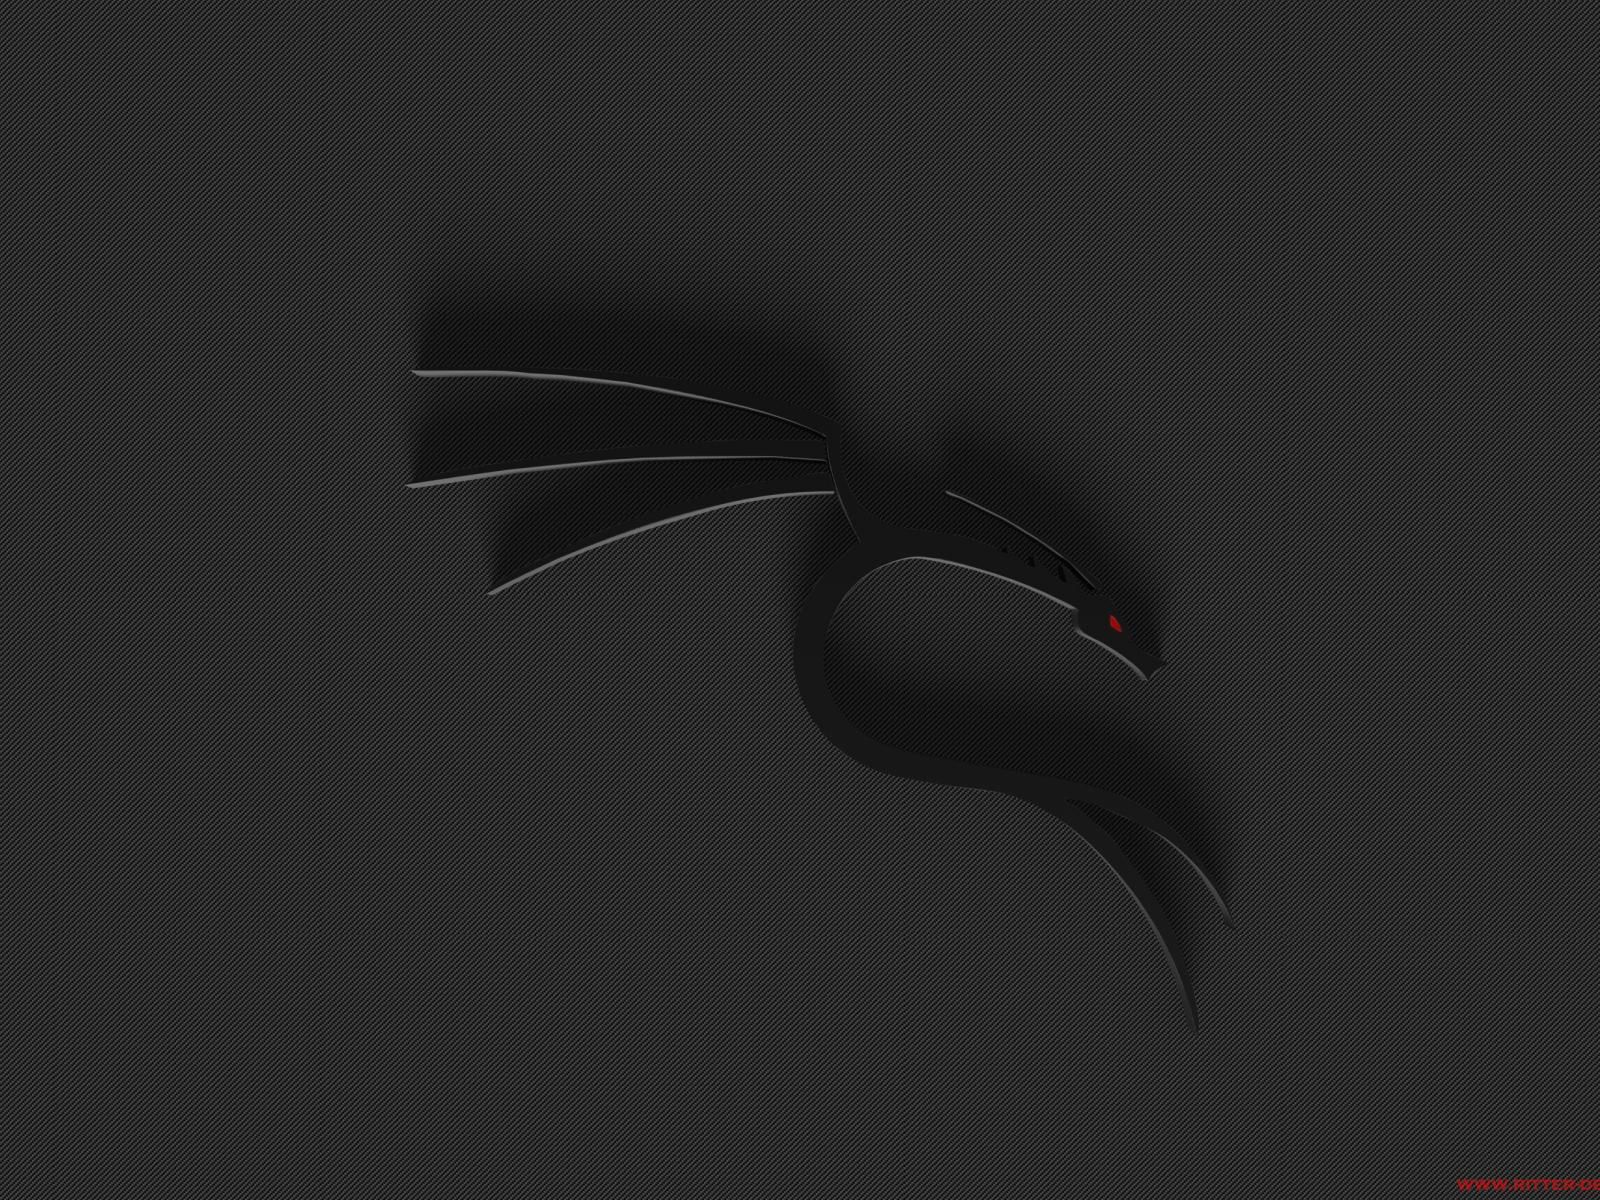 Wallpaper Black Dragon Kali Linux On Desktop.com